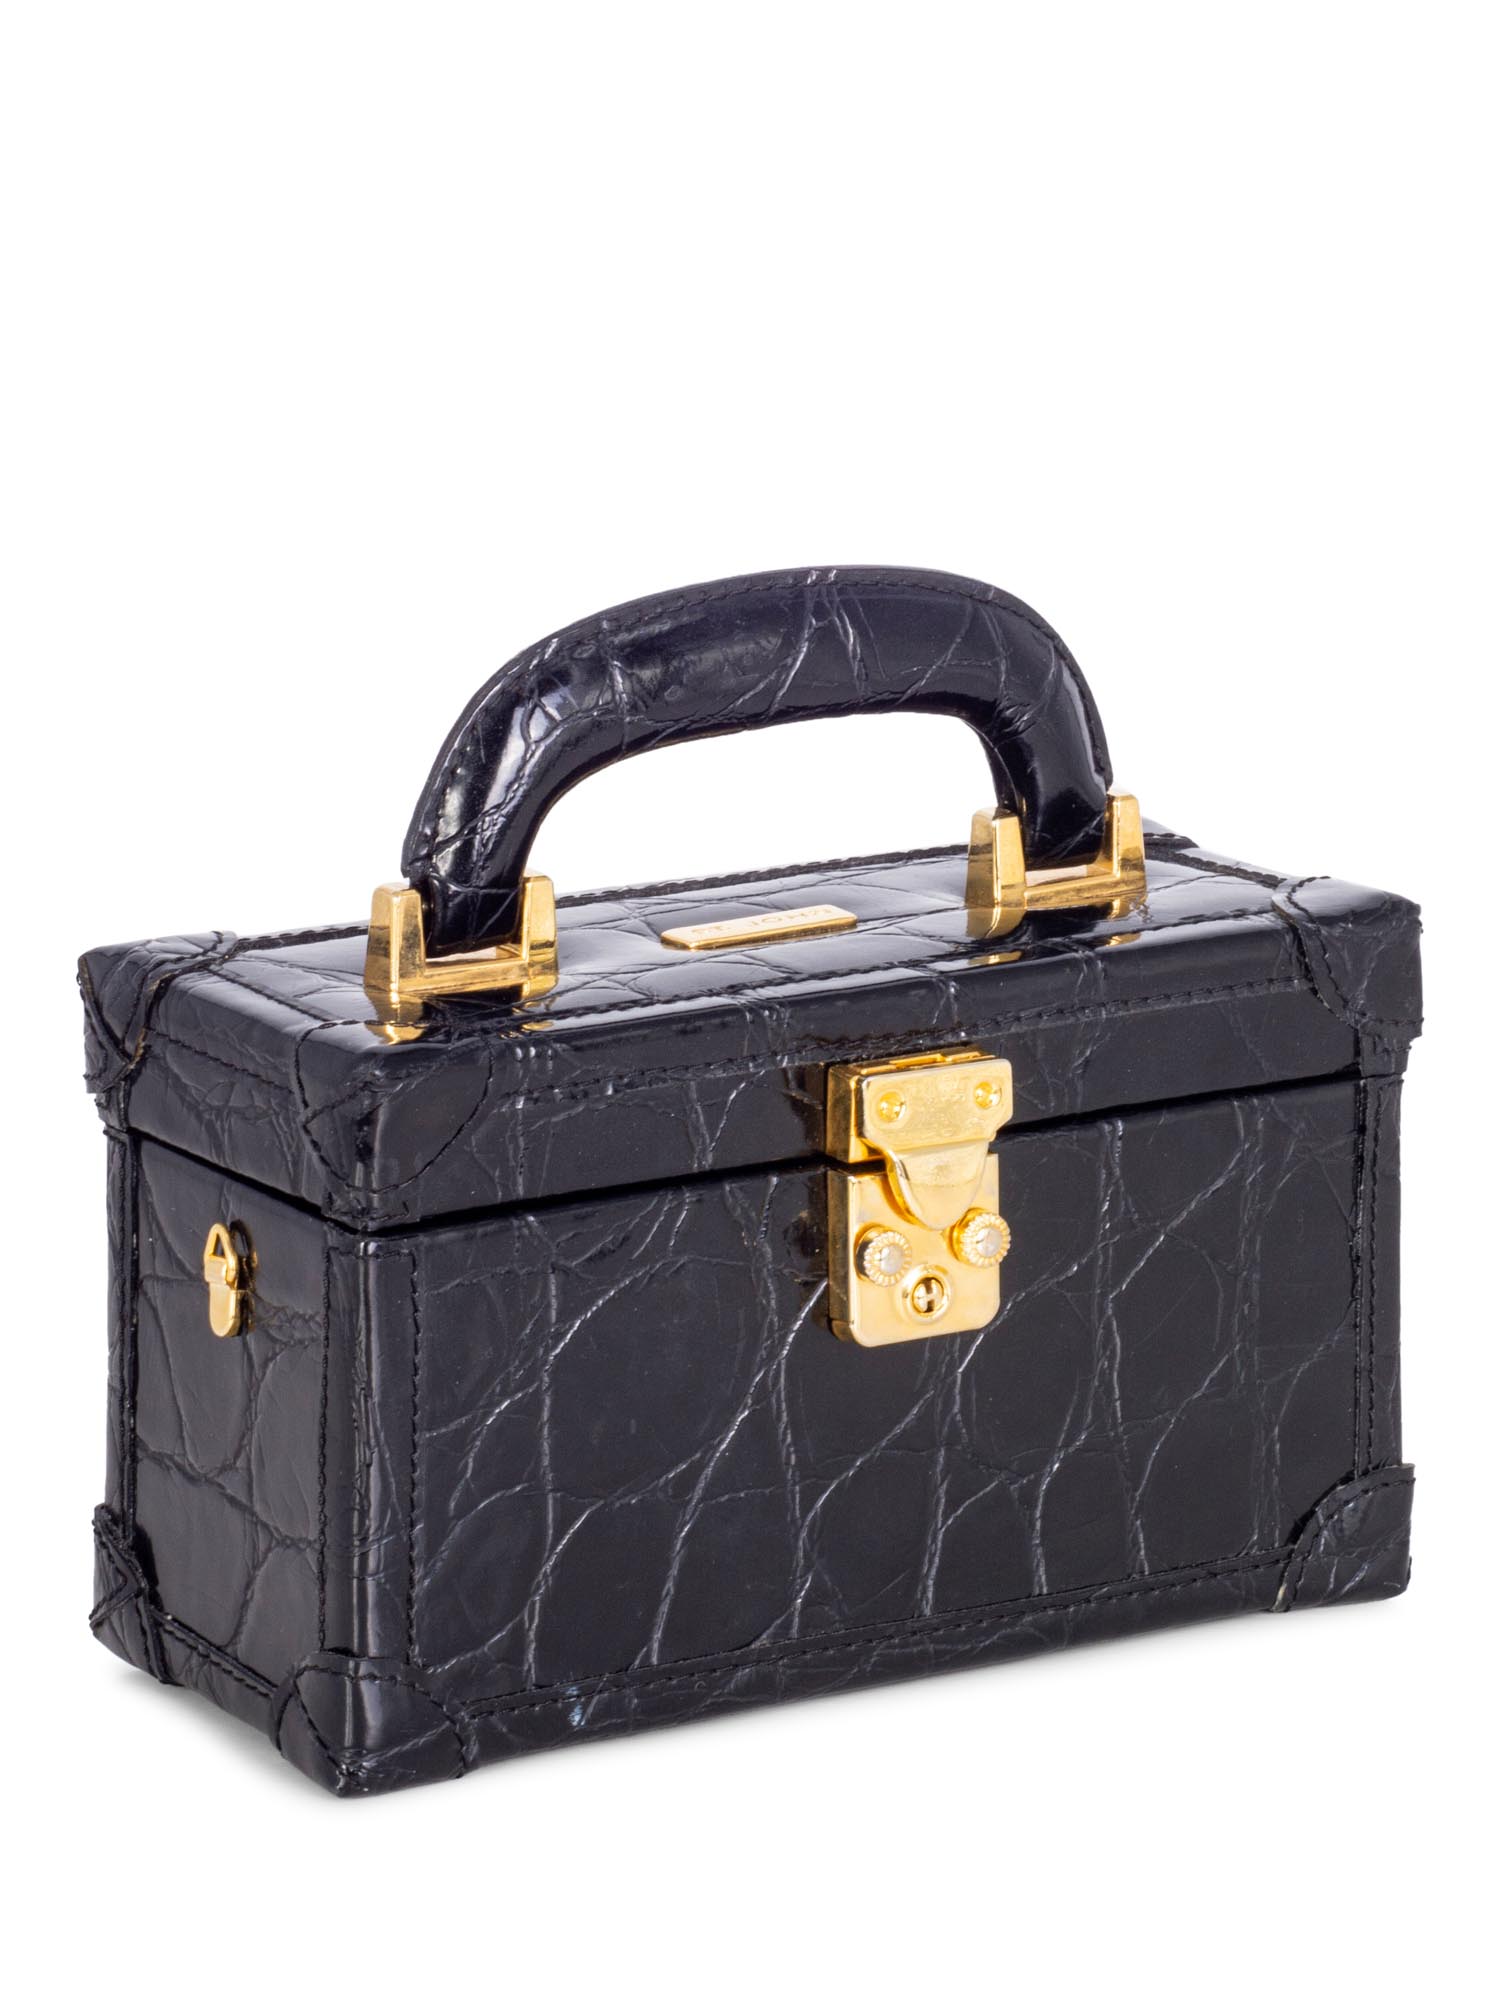 St. John's Crocodile Embossed Leather Mini Top Handle Bag Black-designer resale